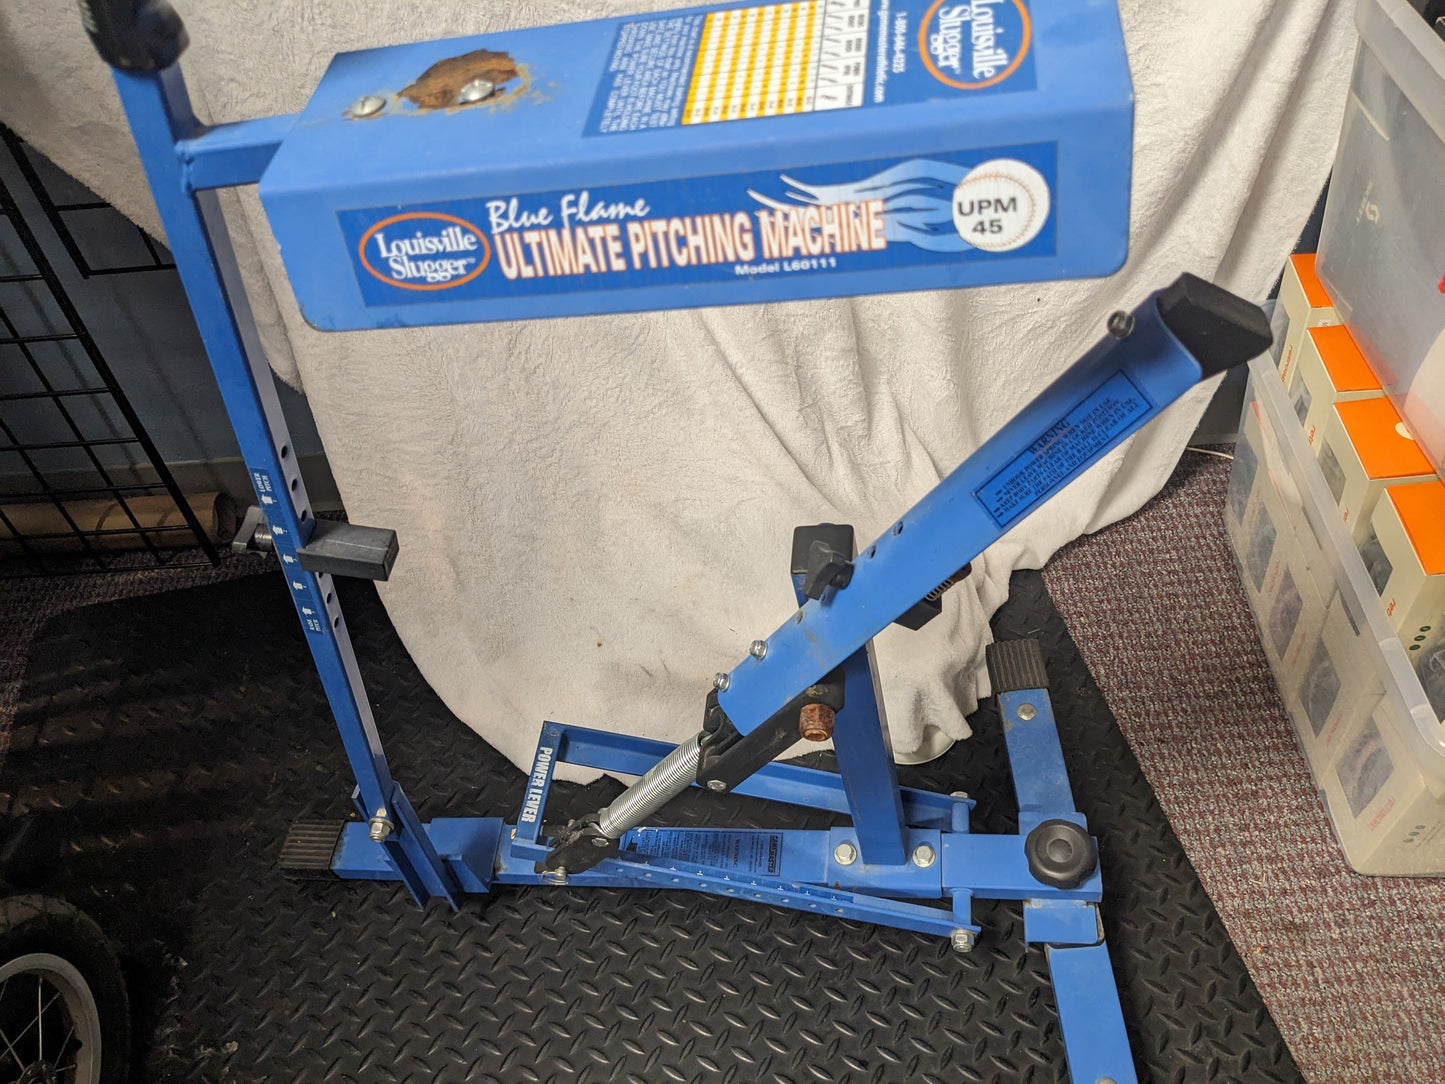 Louisville Slugger Blue Flame Pitching Machine - UPM45